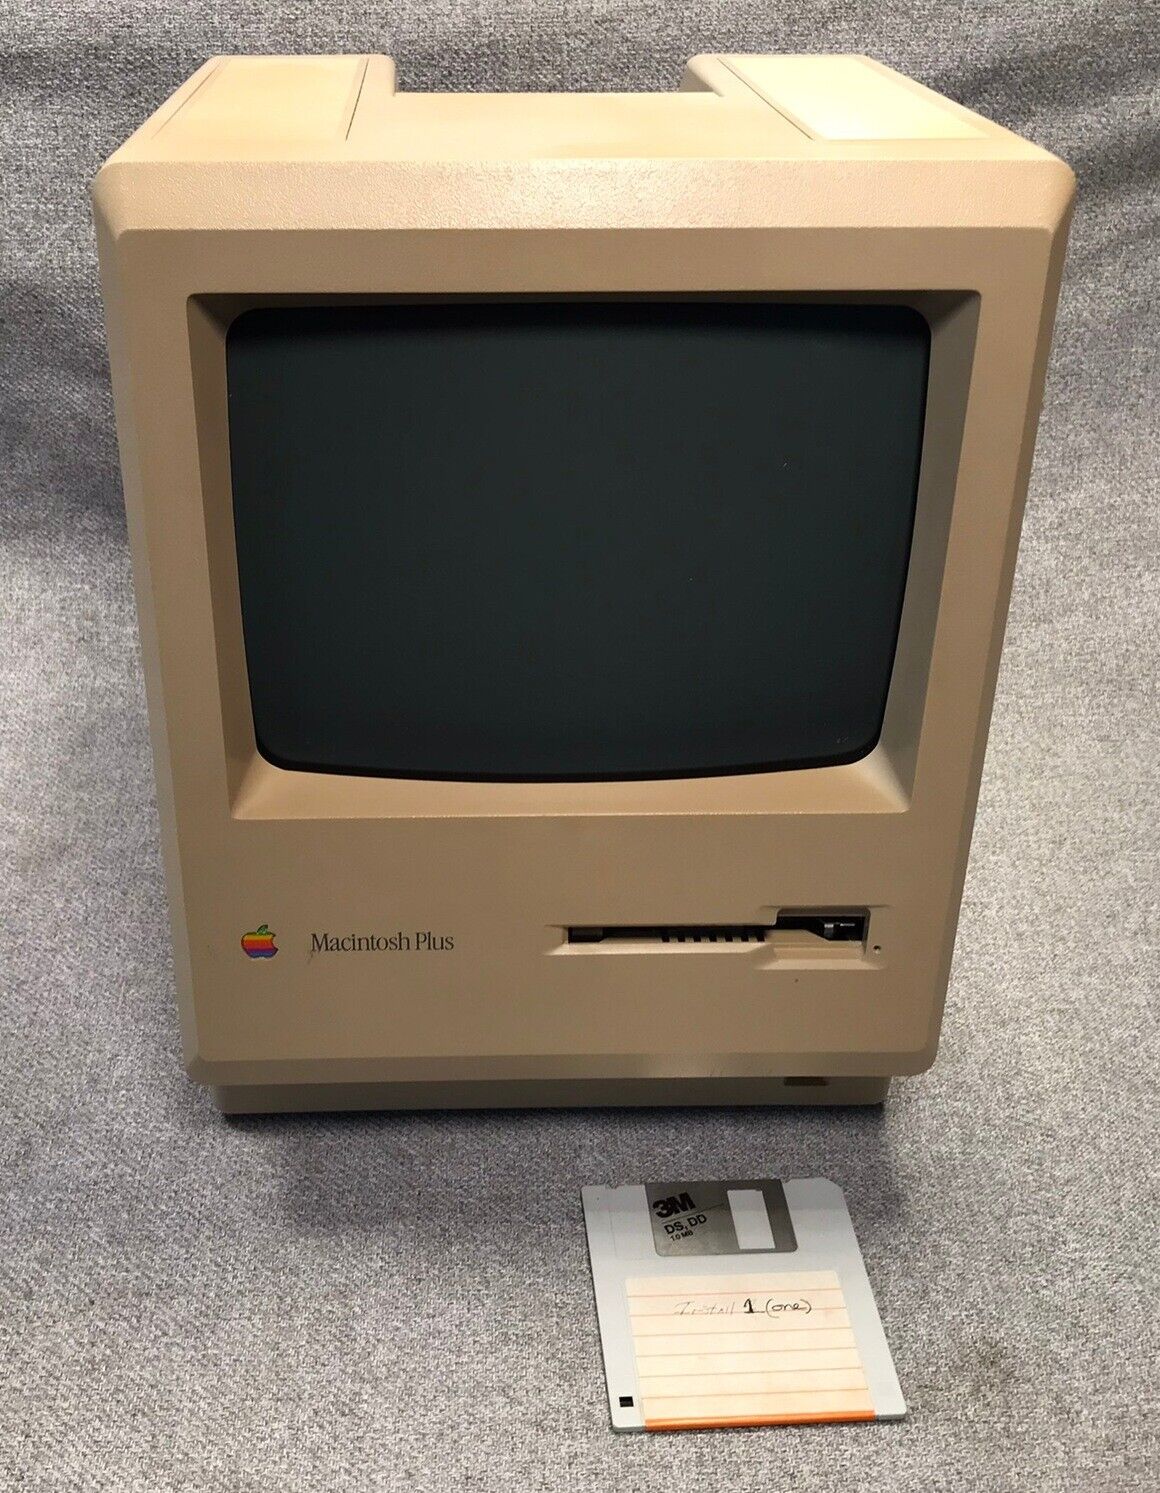 Vintage Apple Macintosh Plus Computer 1Mb, Model M0001A - Sold for Parts/Repair.